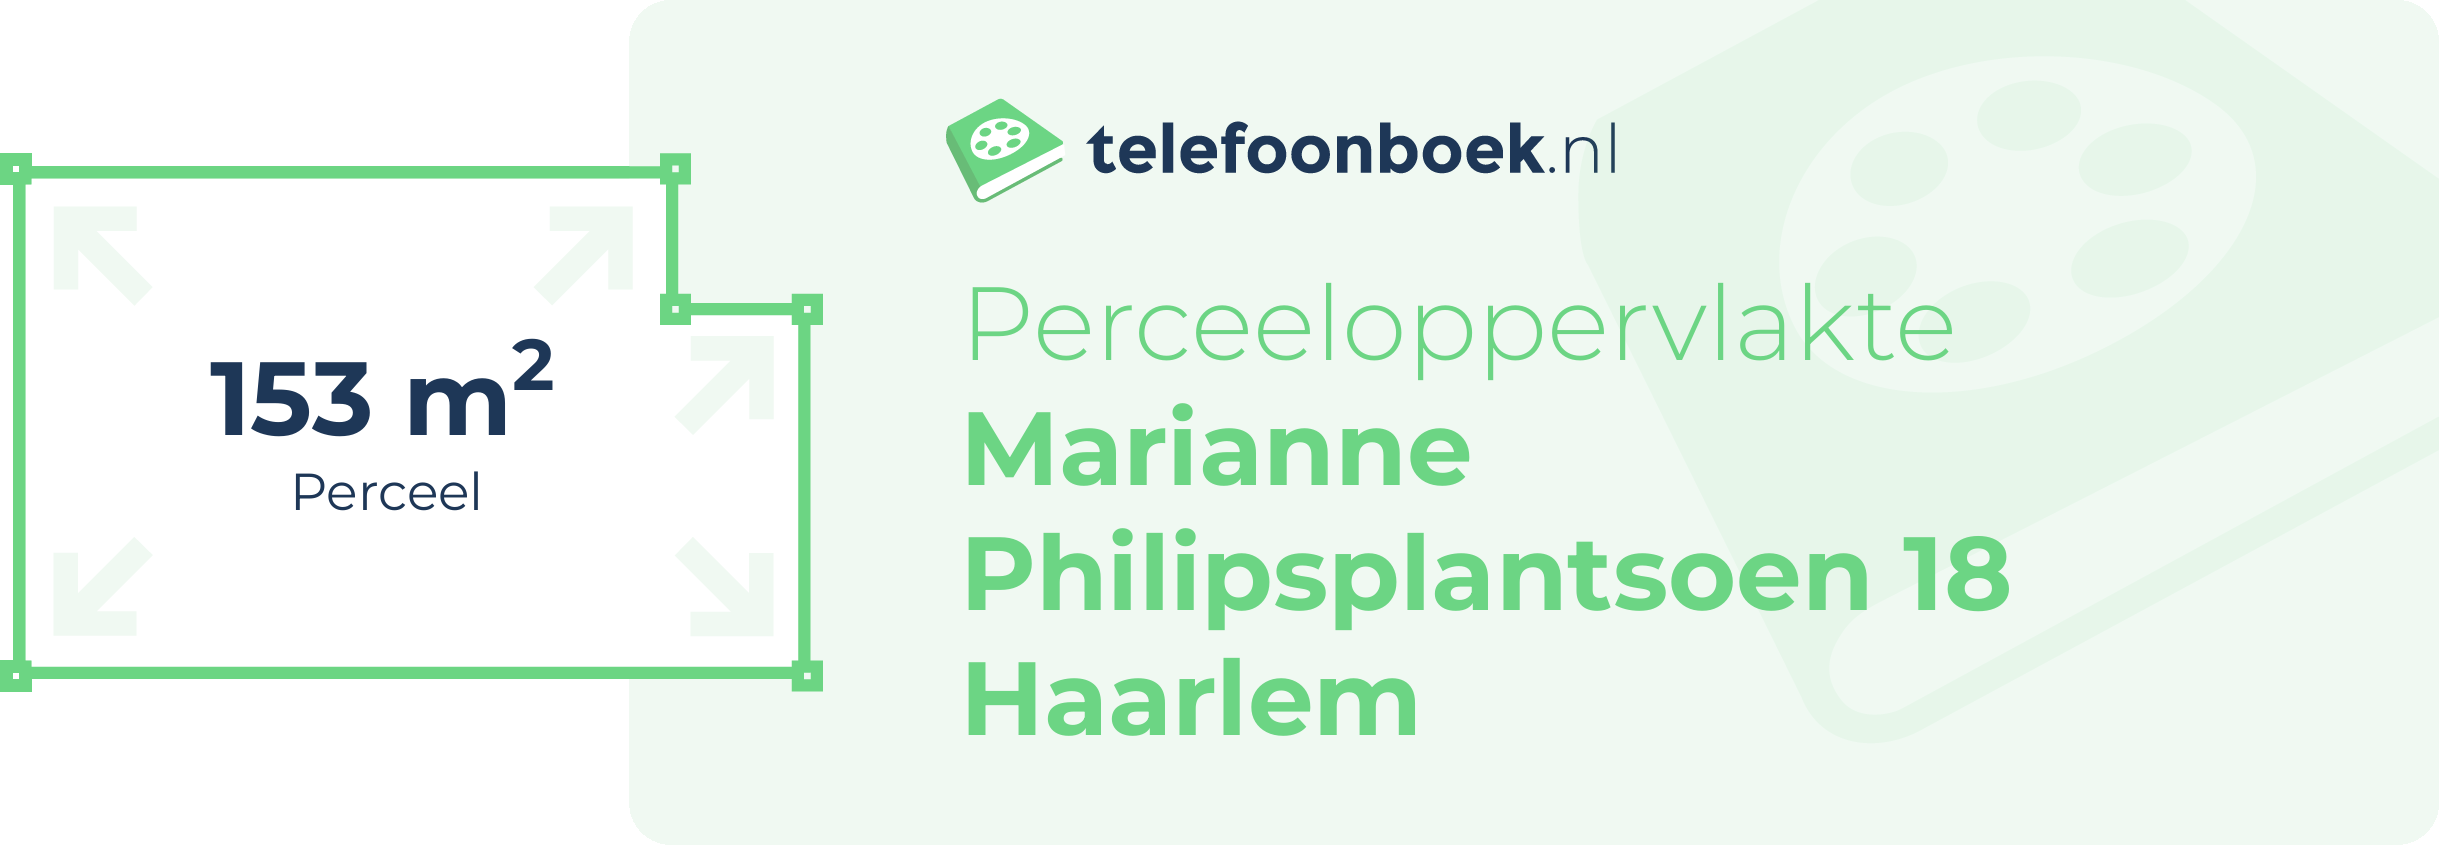 Perceeloppervlakte Marianne Philipsplantsoen 18 Haarlem